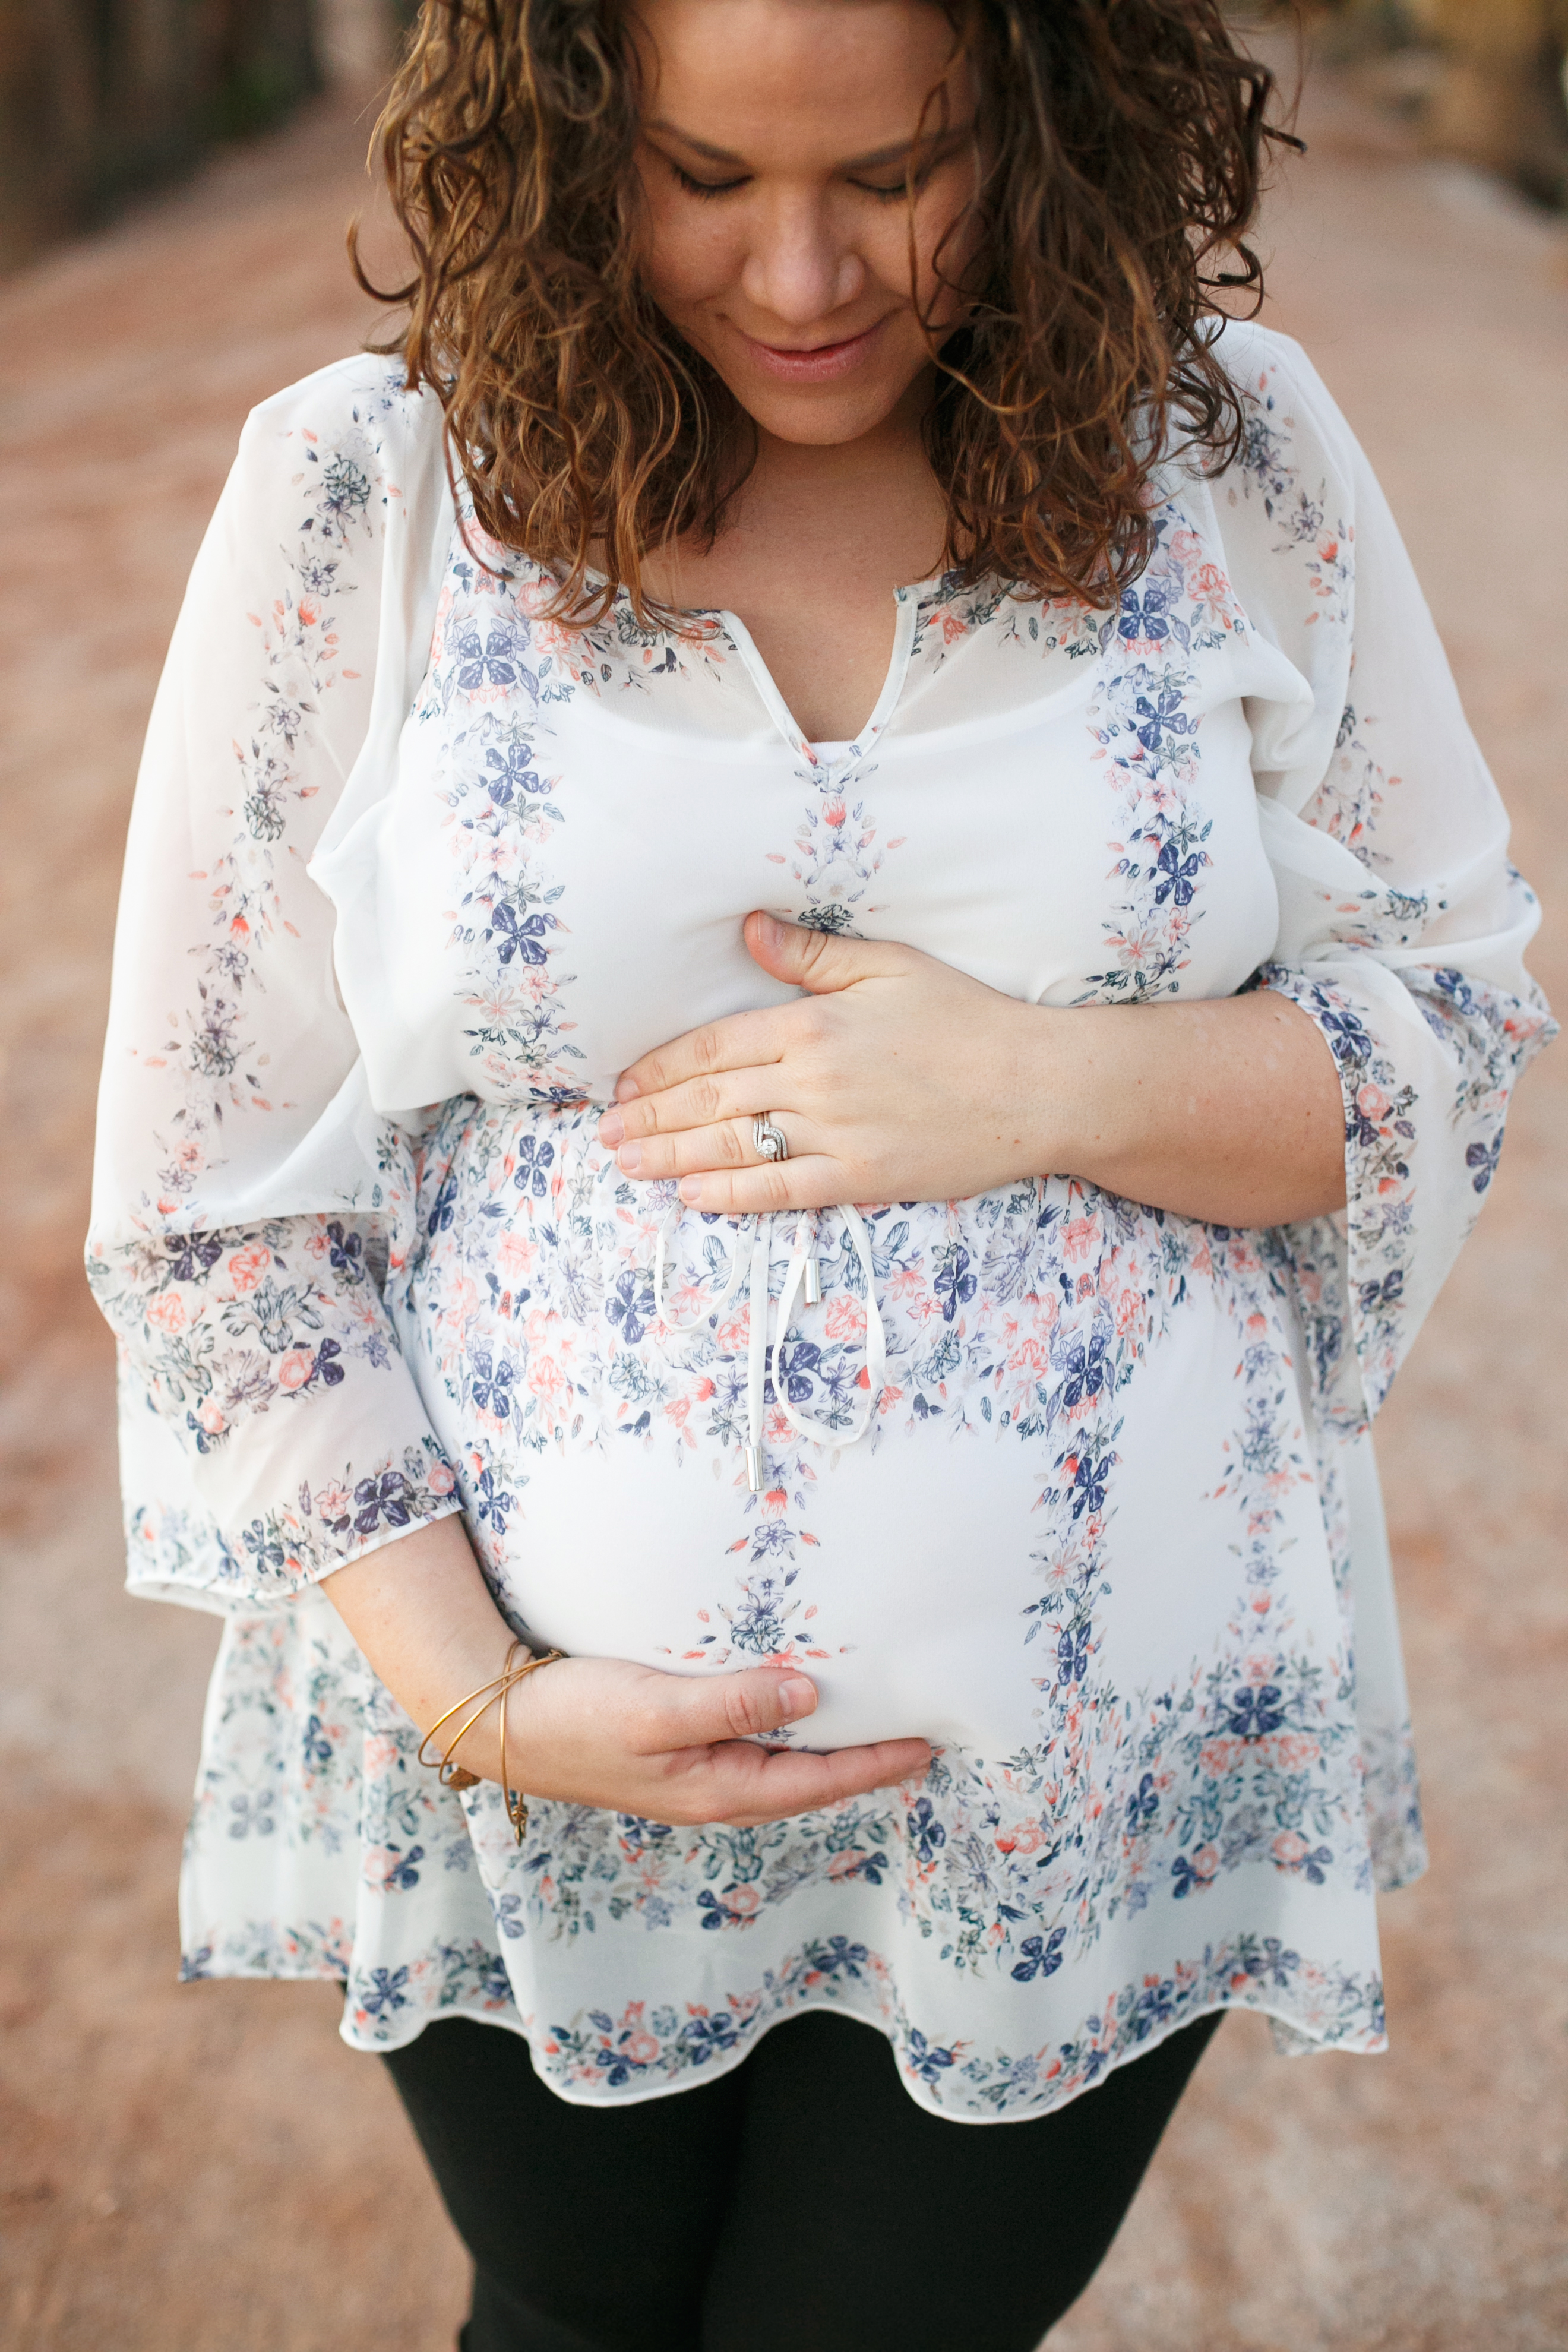 Vanessa Ian Are Expecting Phoenix Maternity Photographer Lexy 